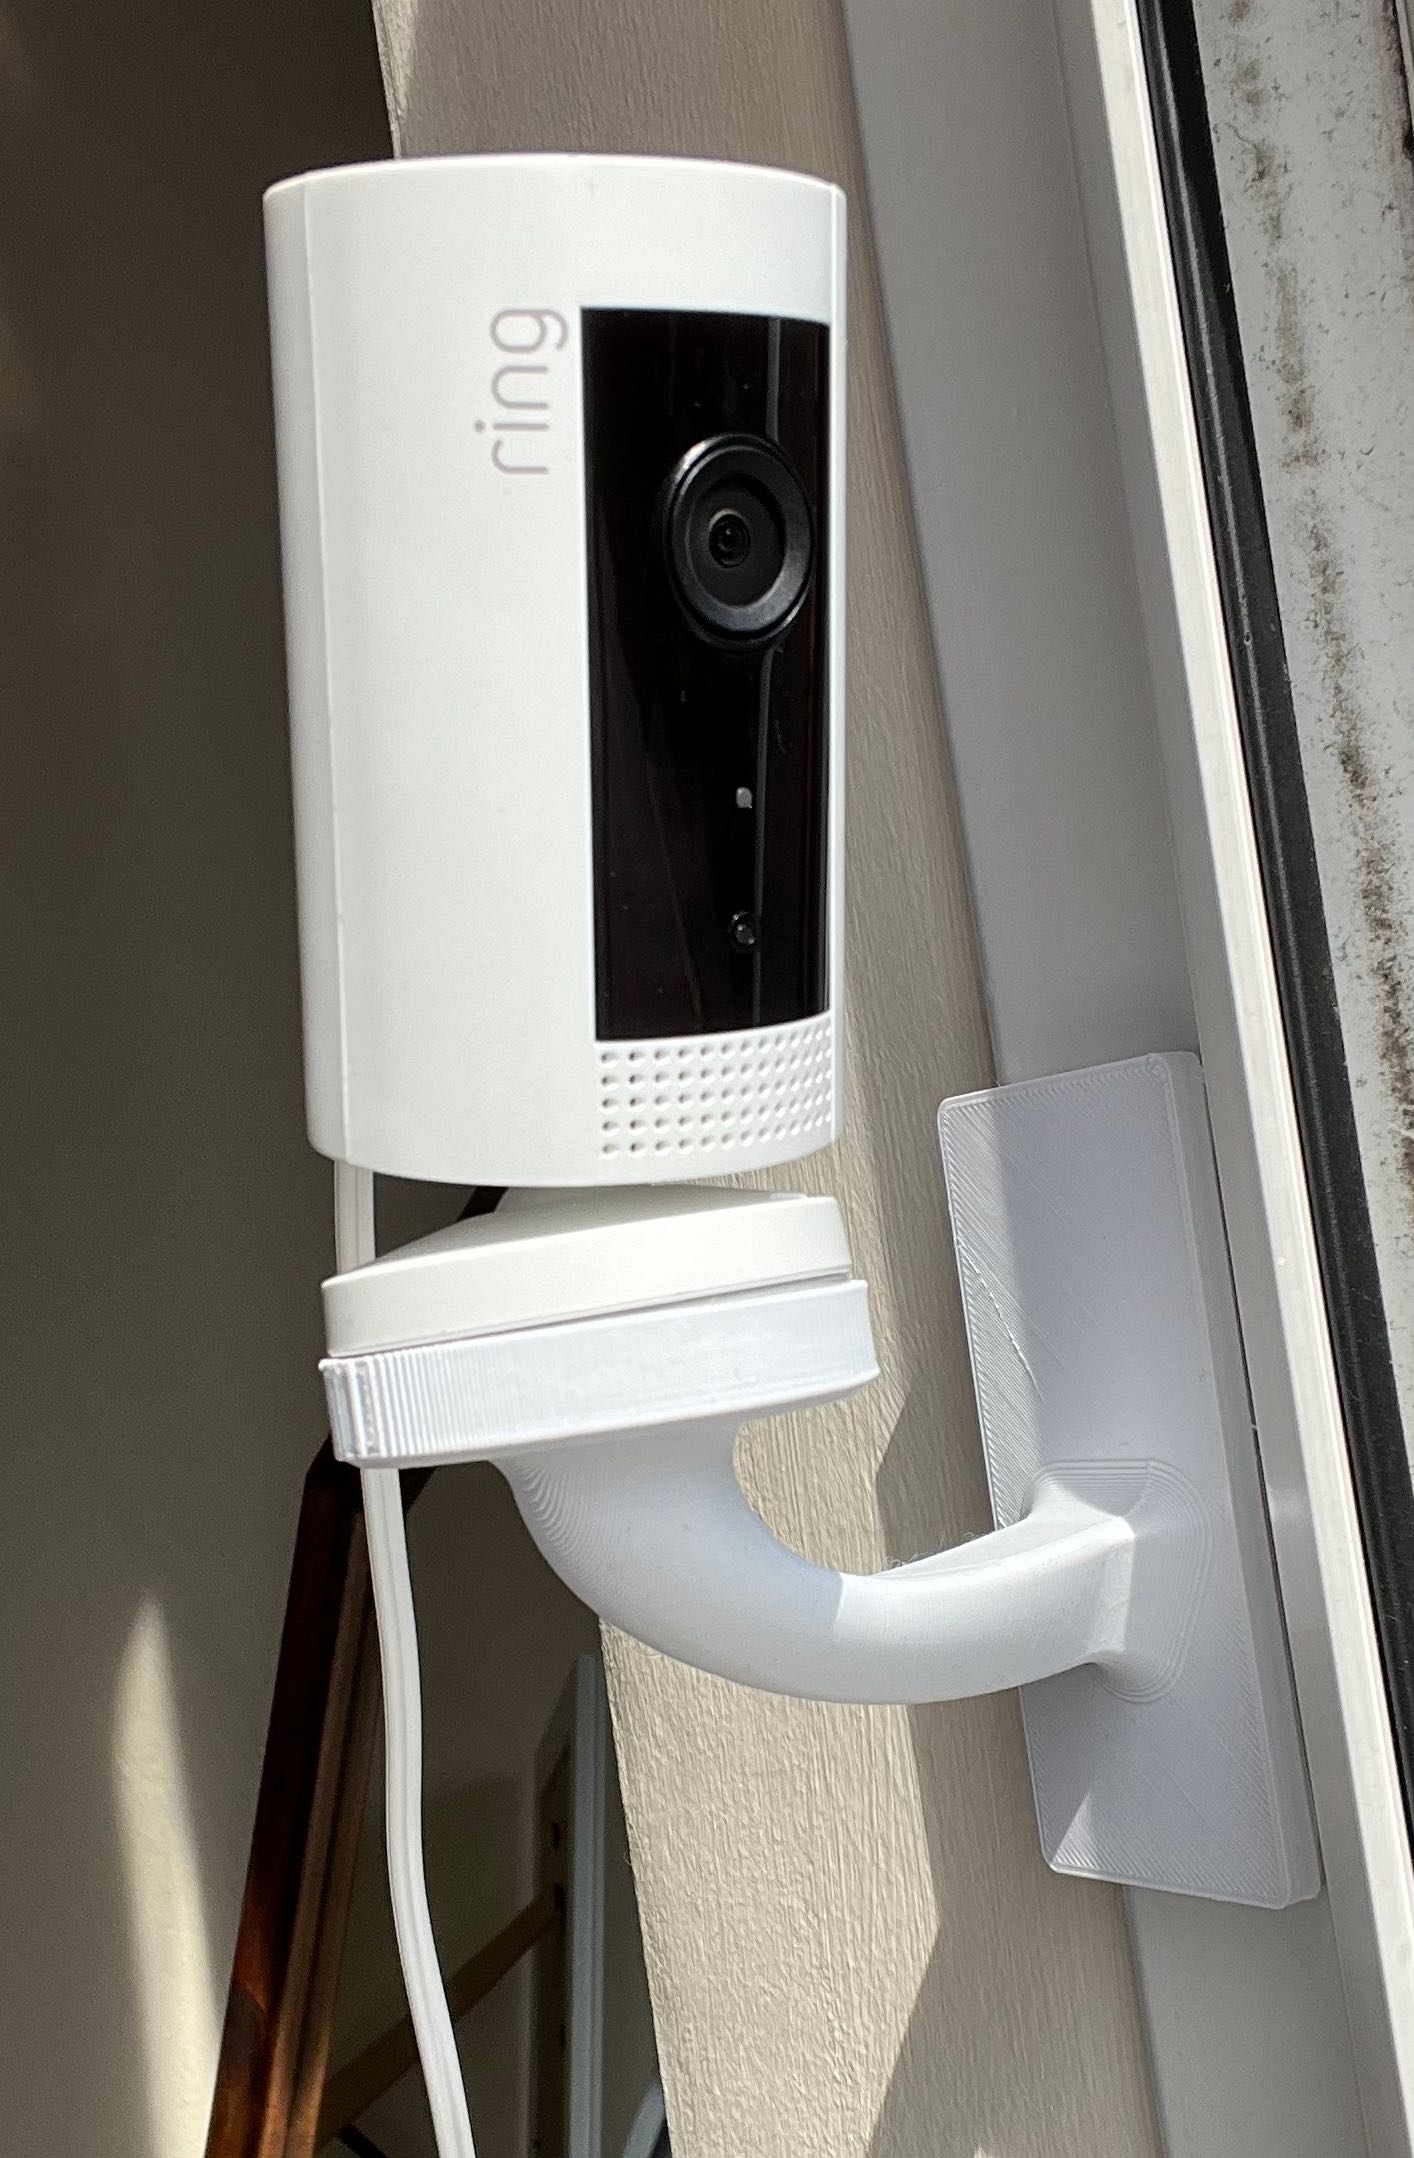 Ring Indoor Camera wall mount bracket